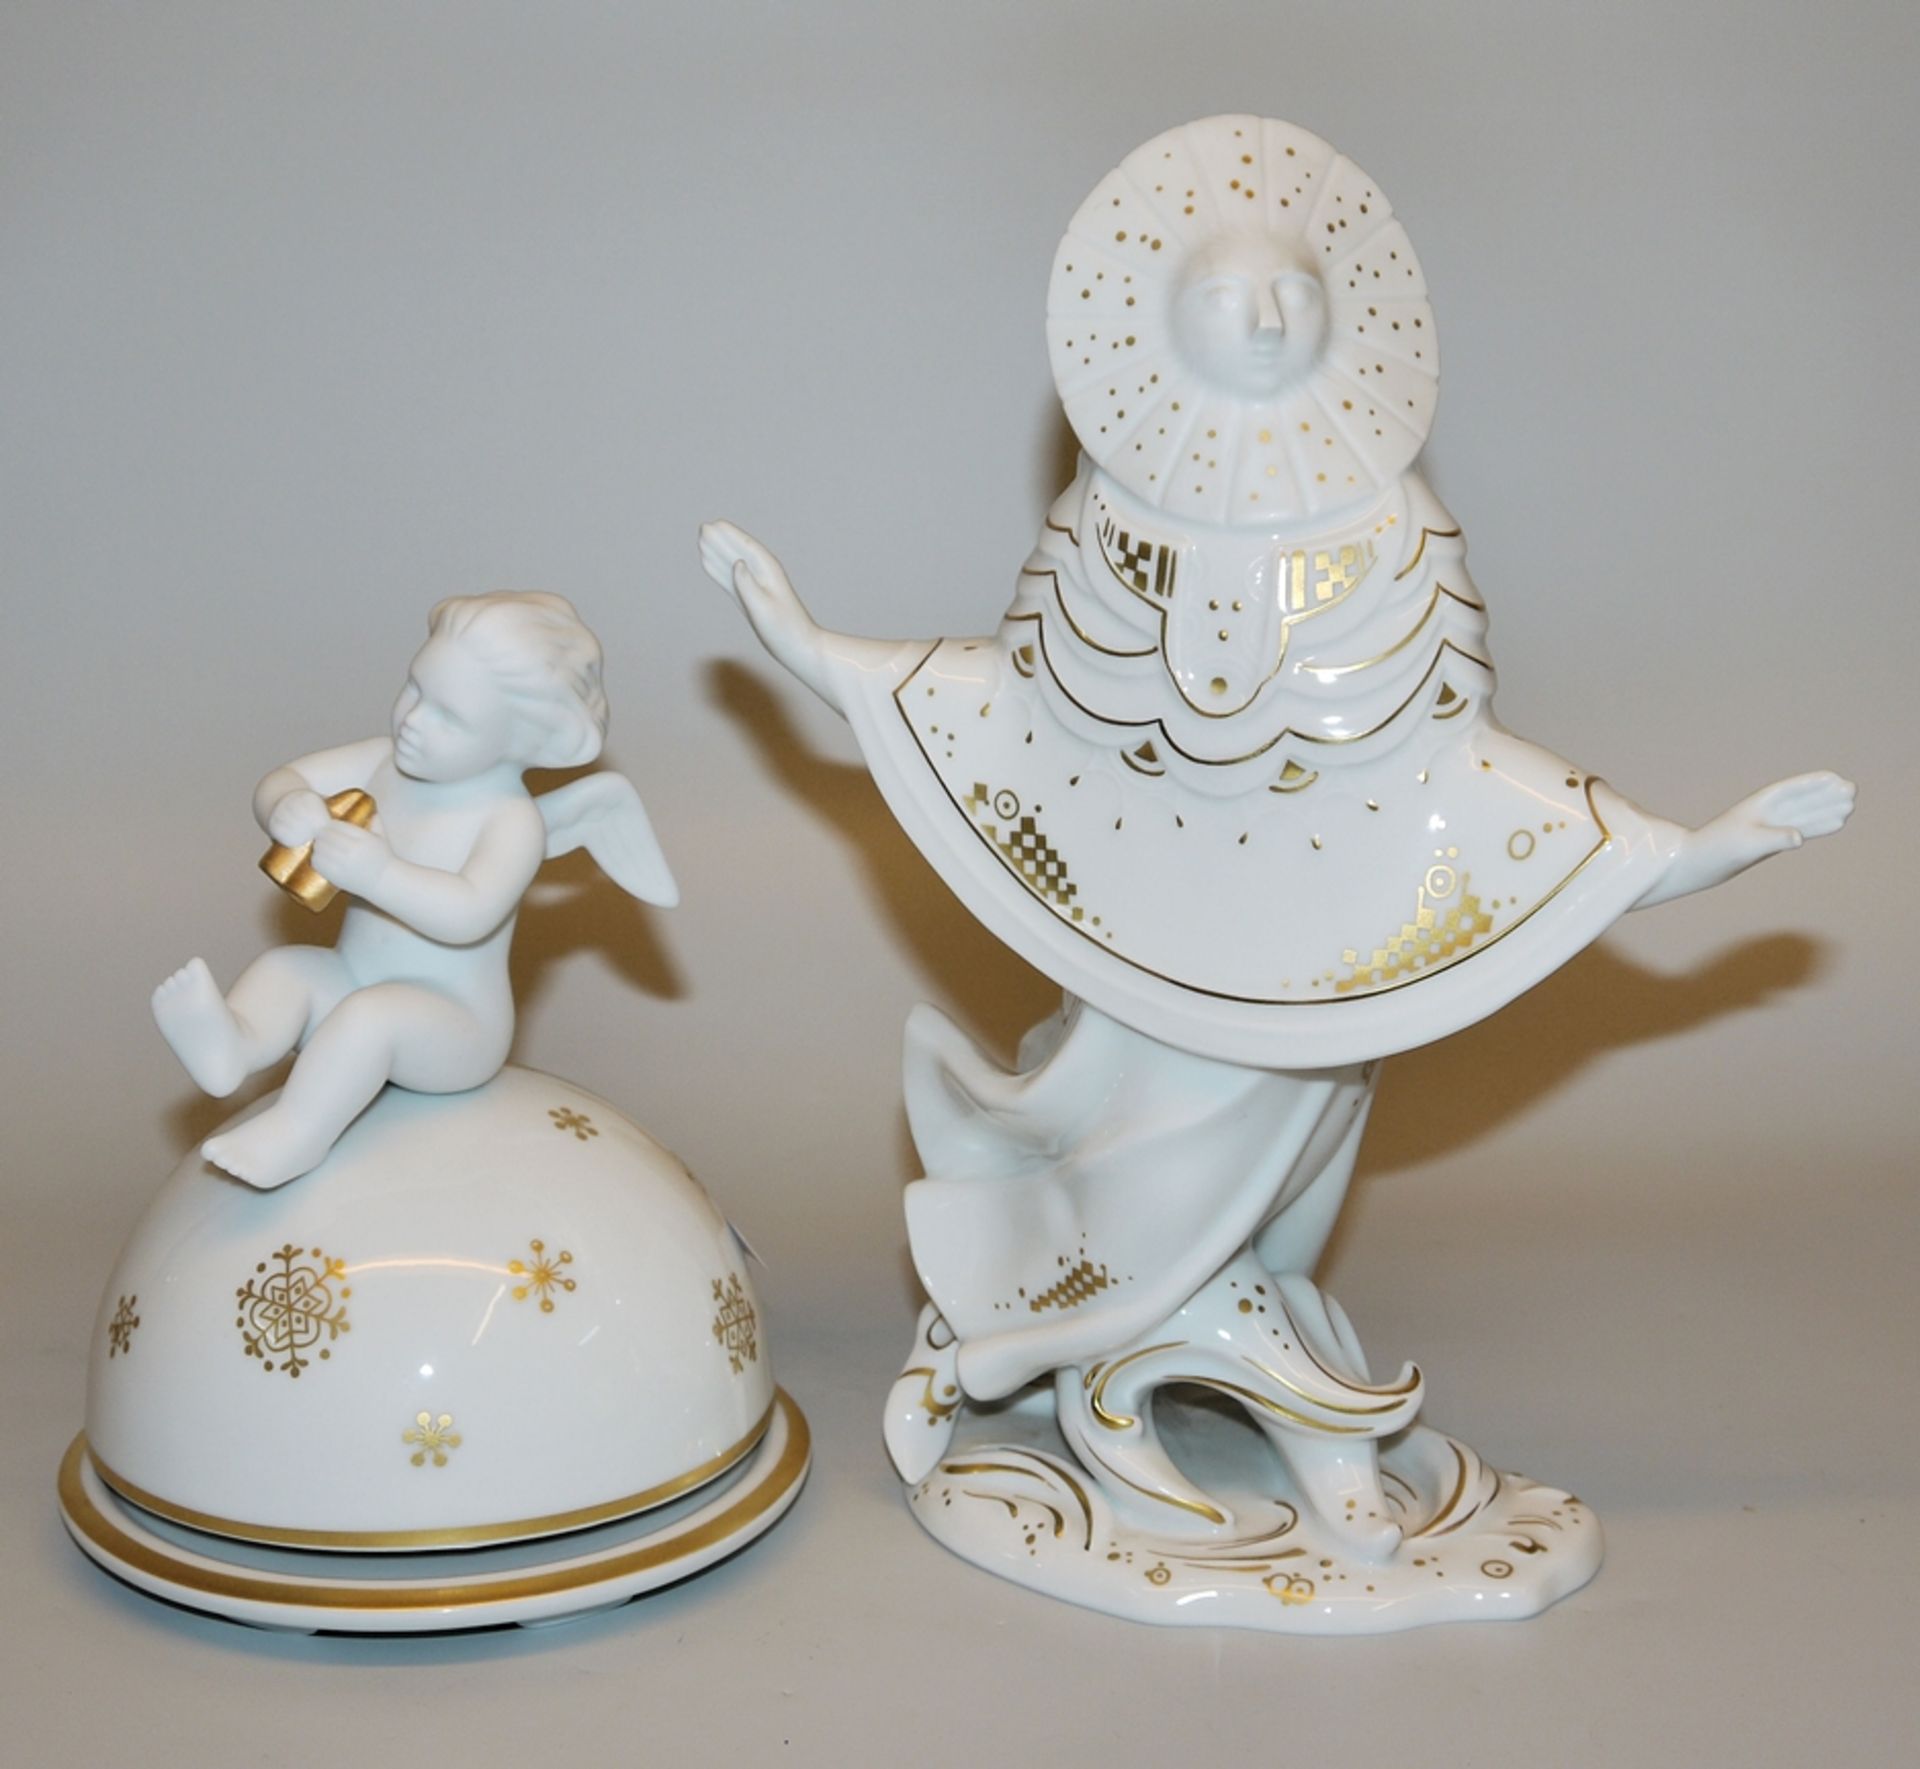 Porcelain sculpture "Sarastro" from the series "Magic Flute", Björn Wiinblad for Rosenthal & porcel